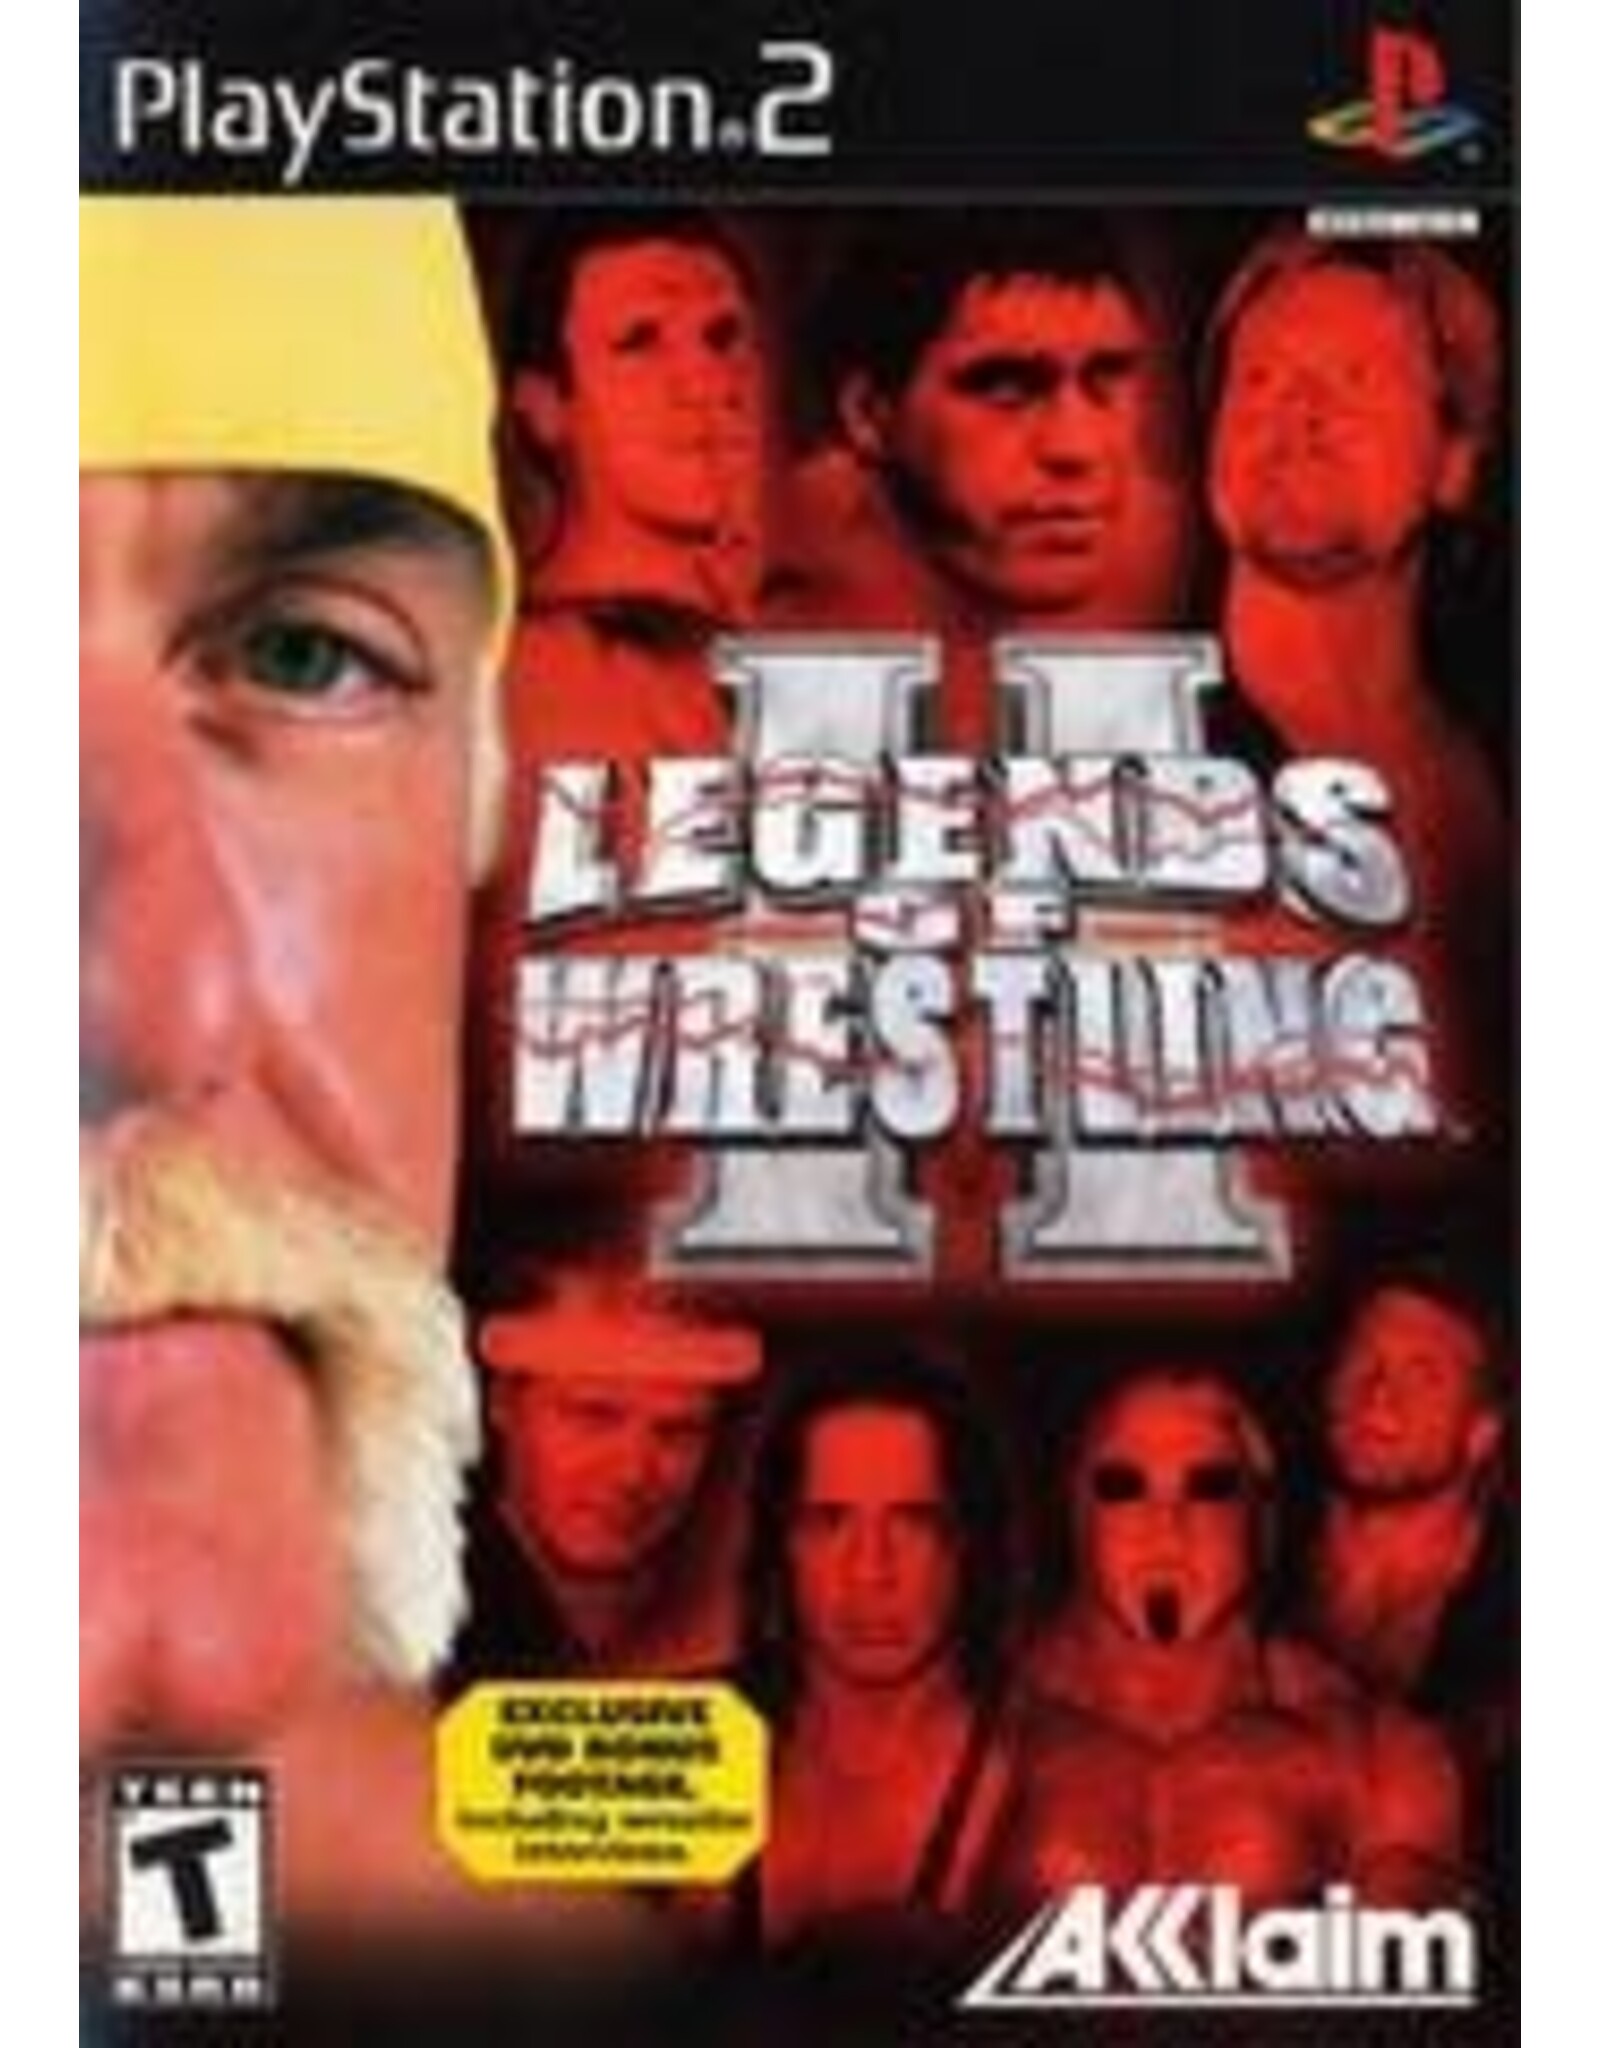 Playstation 2 Legends of Wrestling II (No Manual, Sticker on Disc)